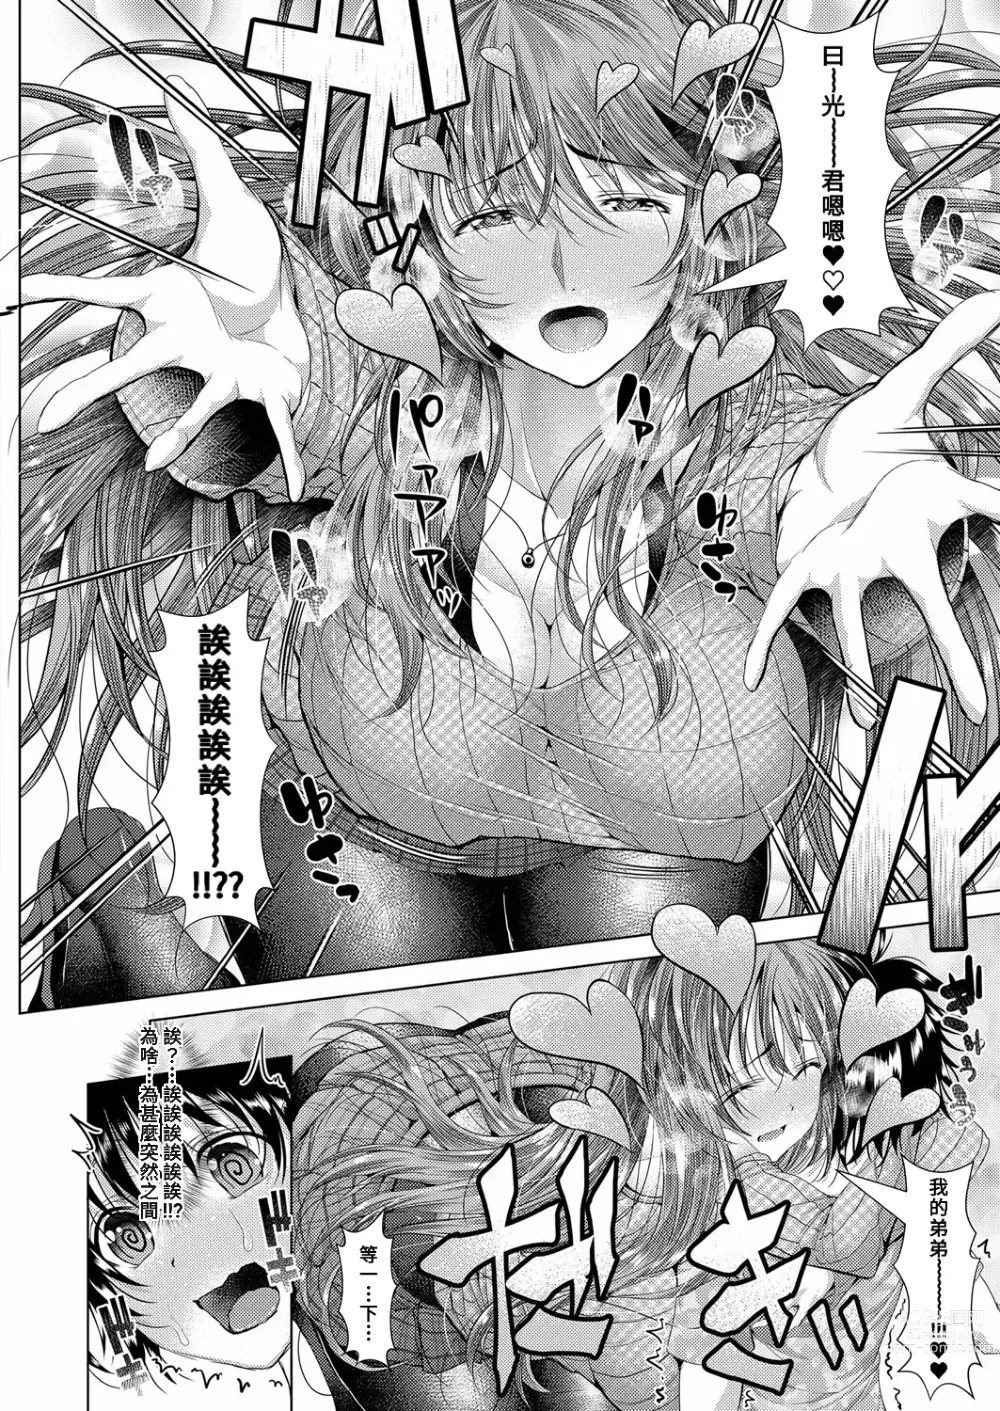 Page 6 of manga Yokujou ☆ Ane Trap